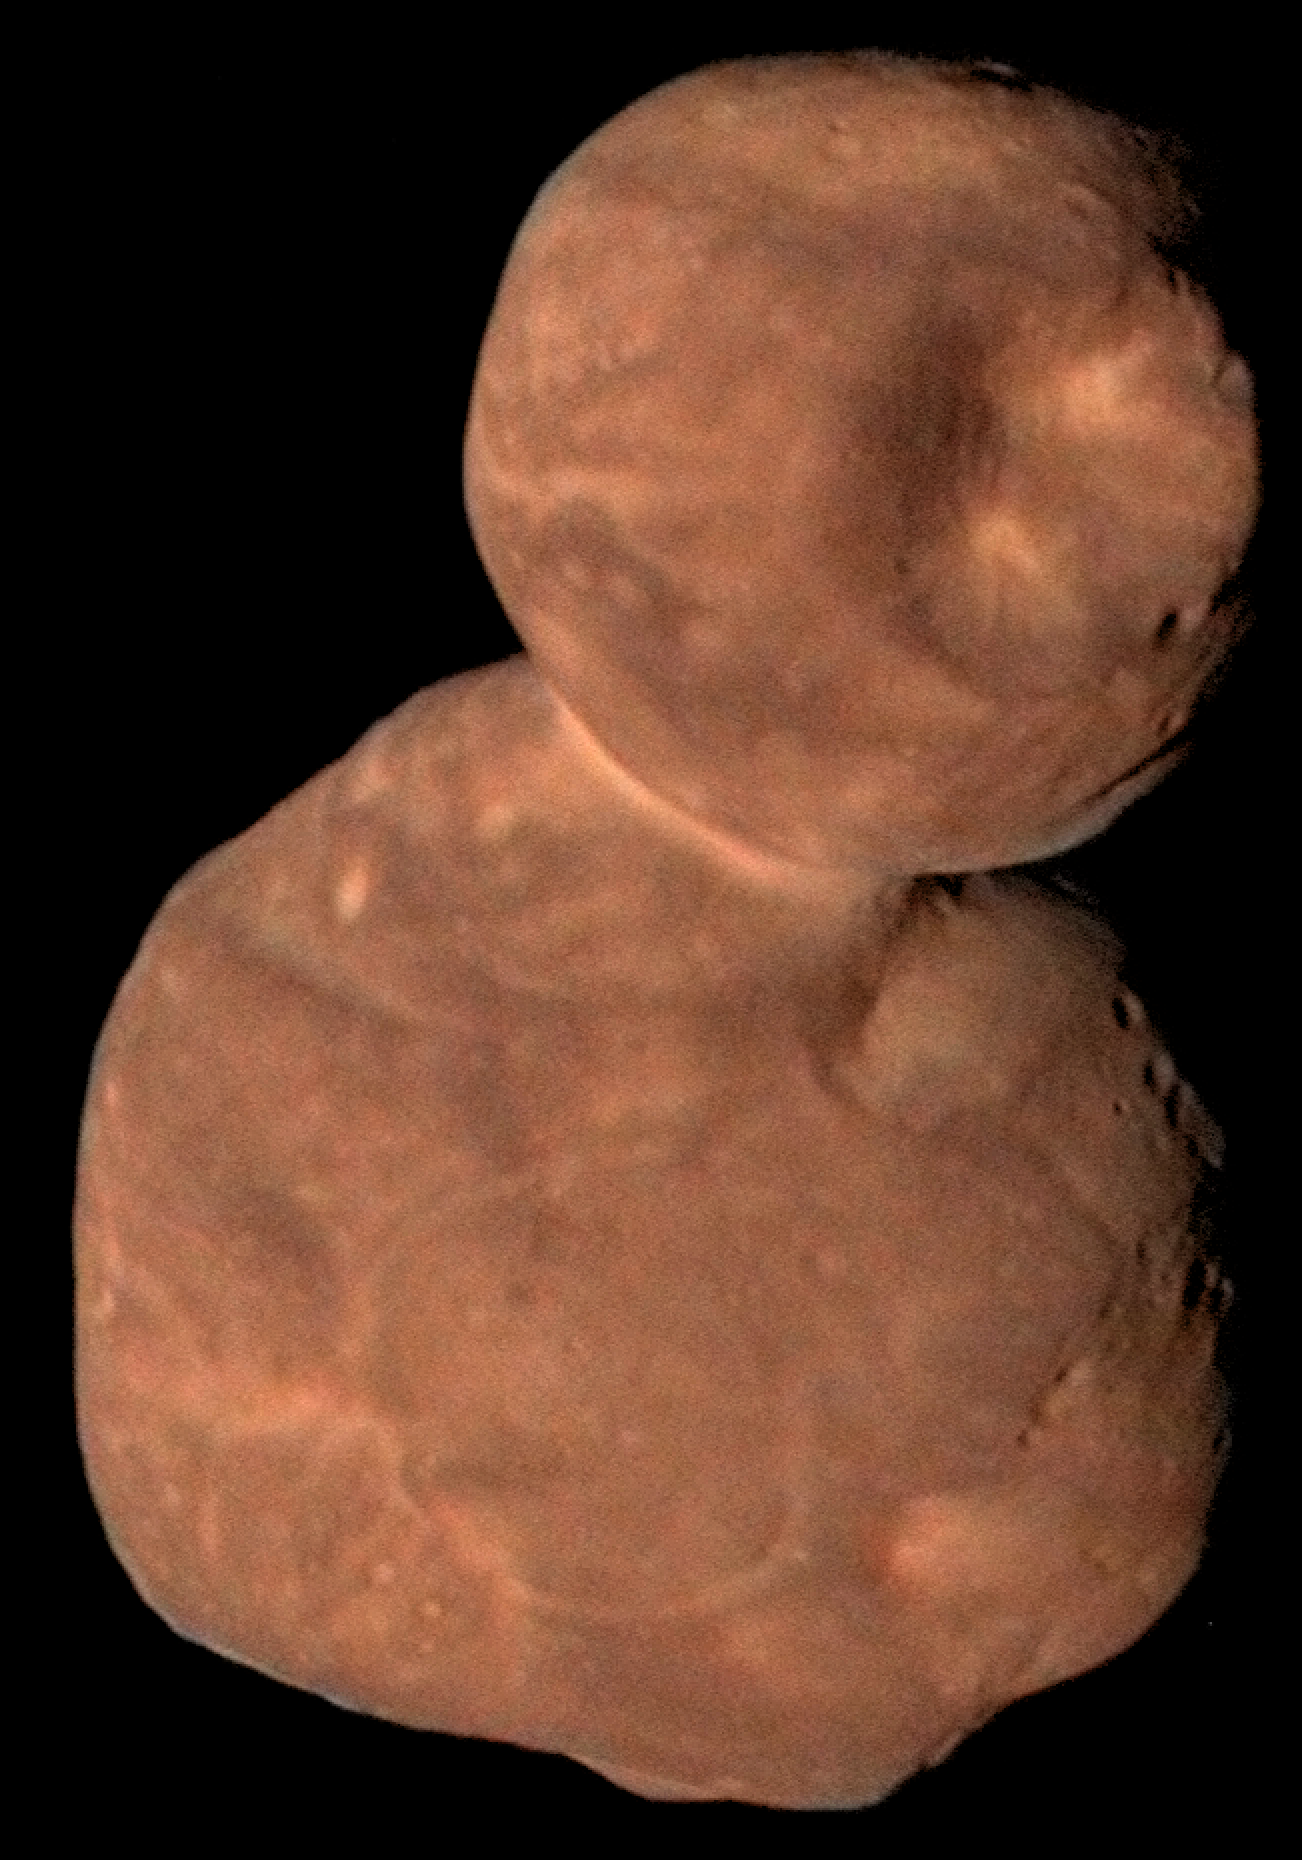 New Horizons Mission, 2014 MU69 Named 'Arrokoth'